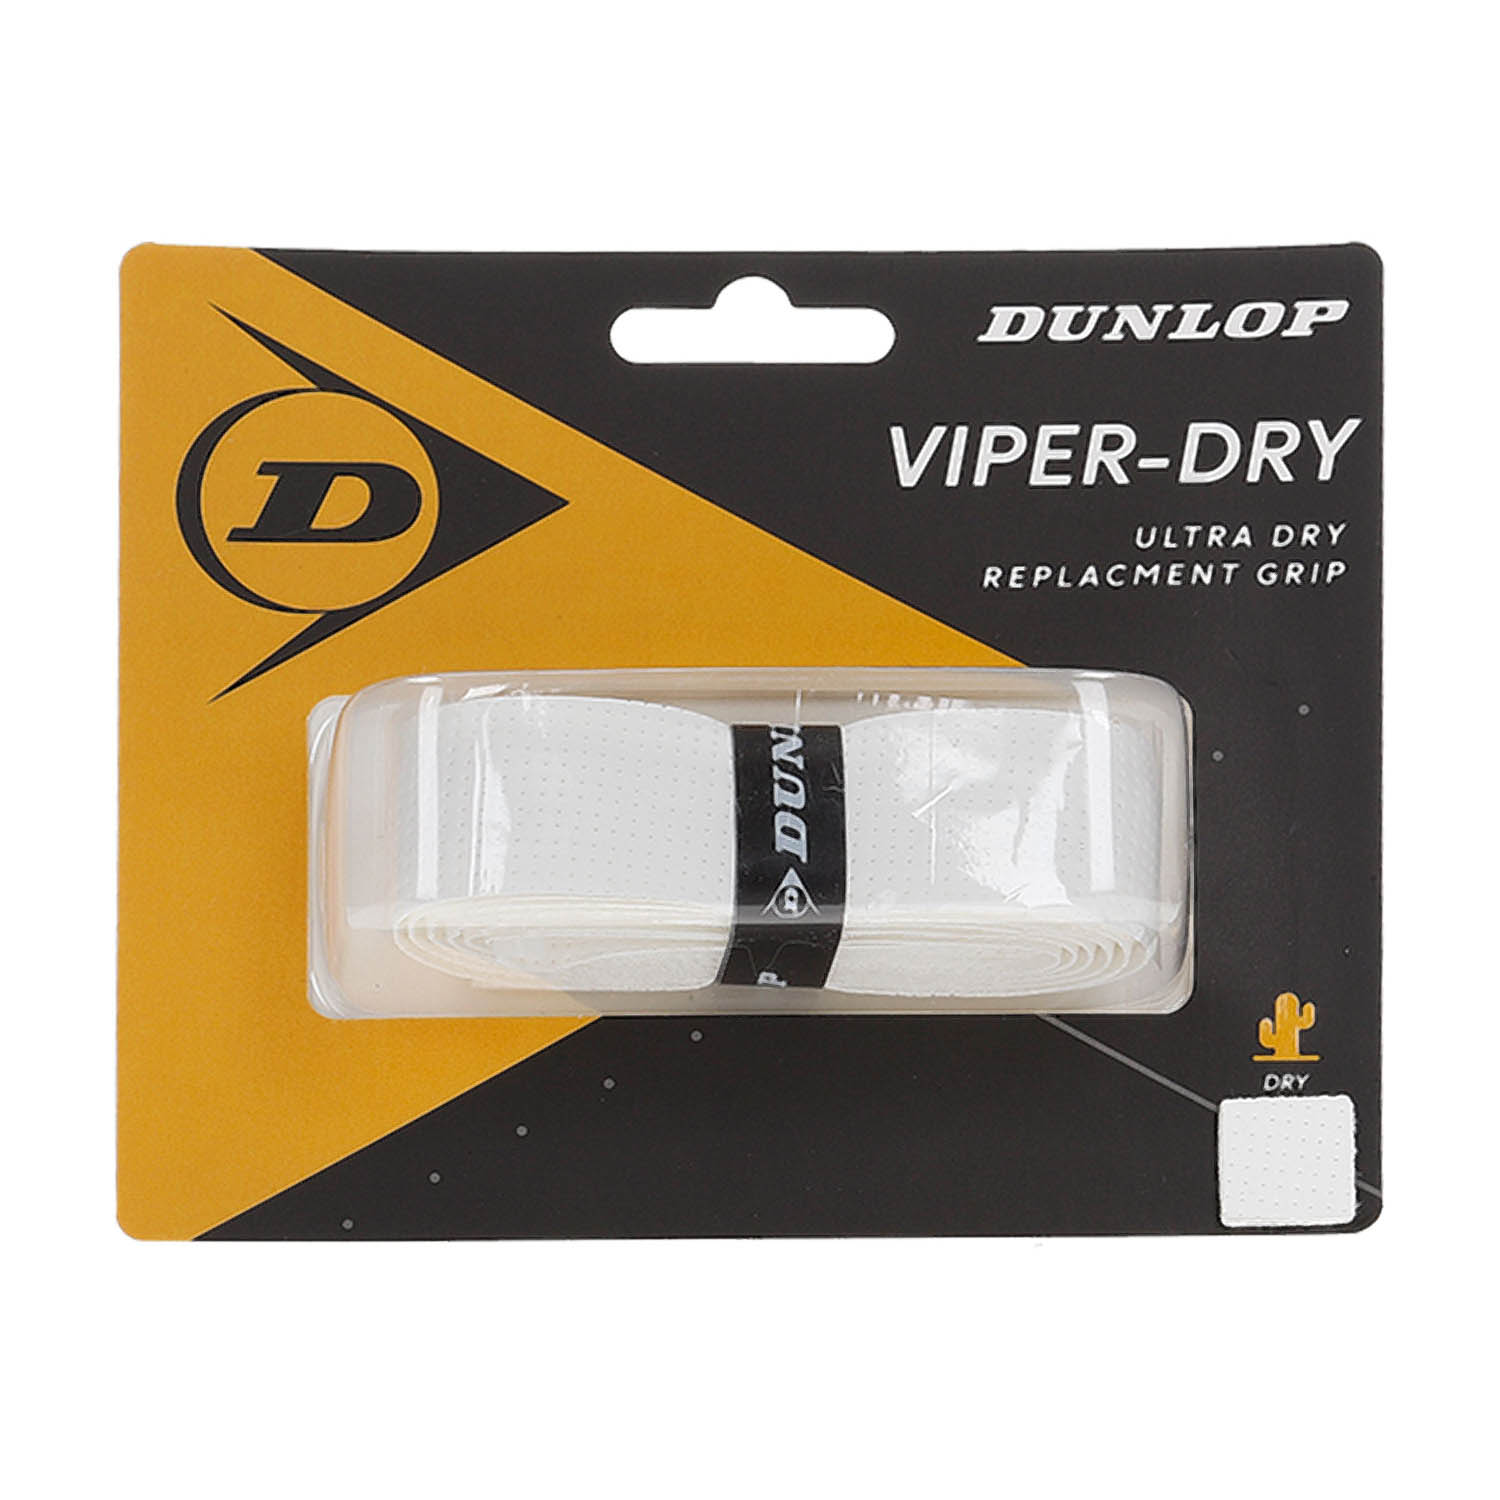 Dunlop Viper-Dry Grips - White